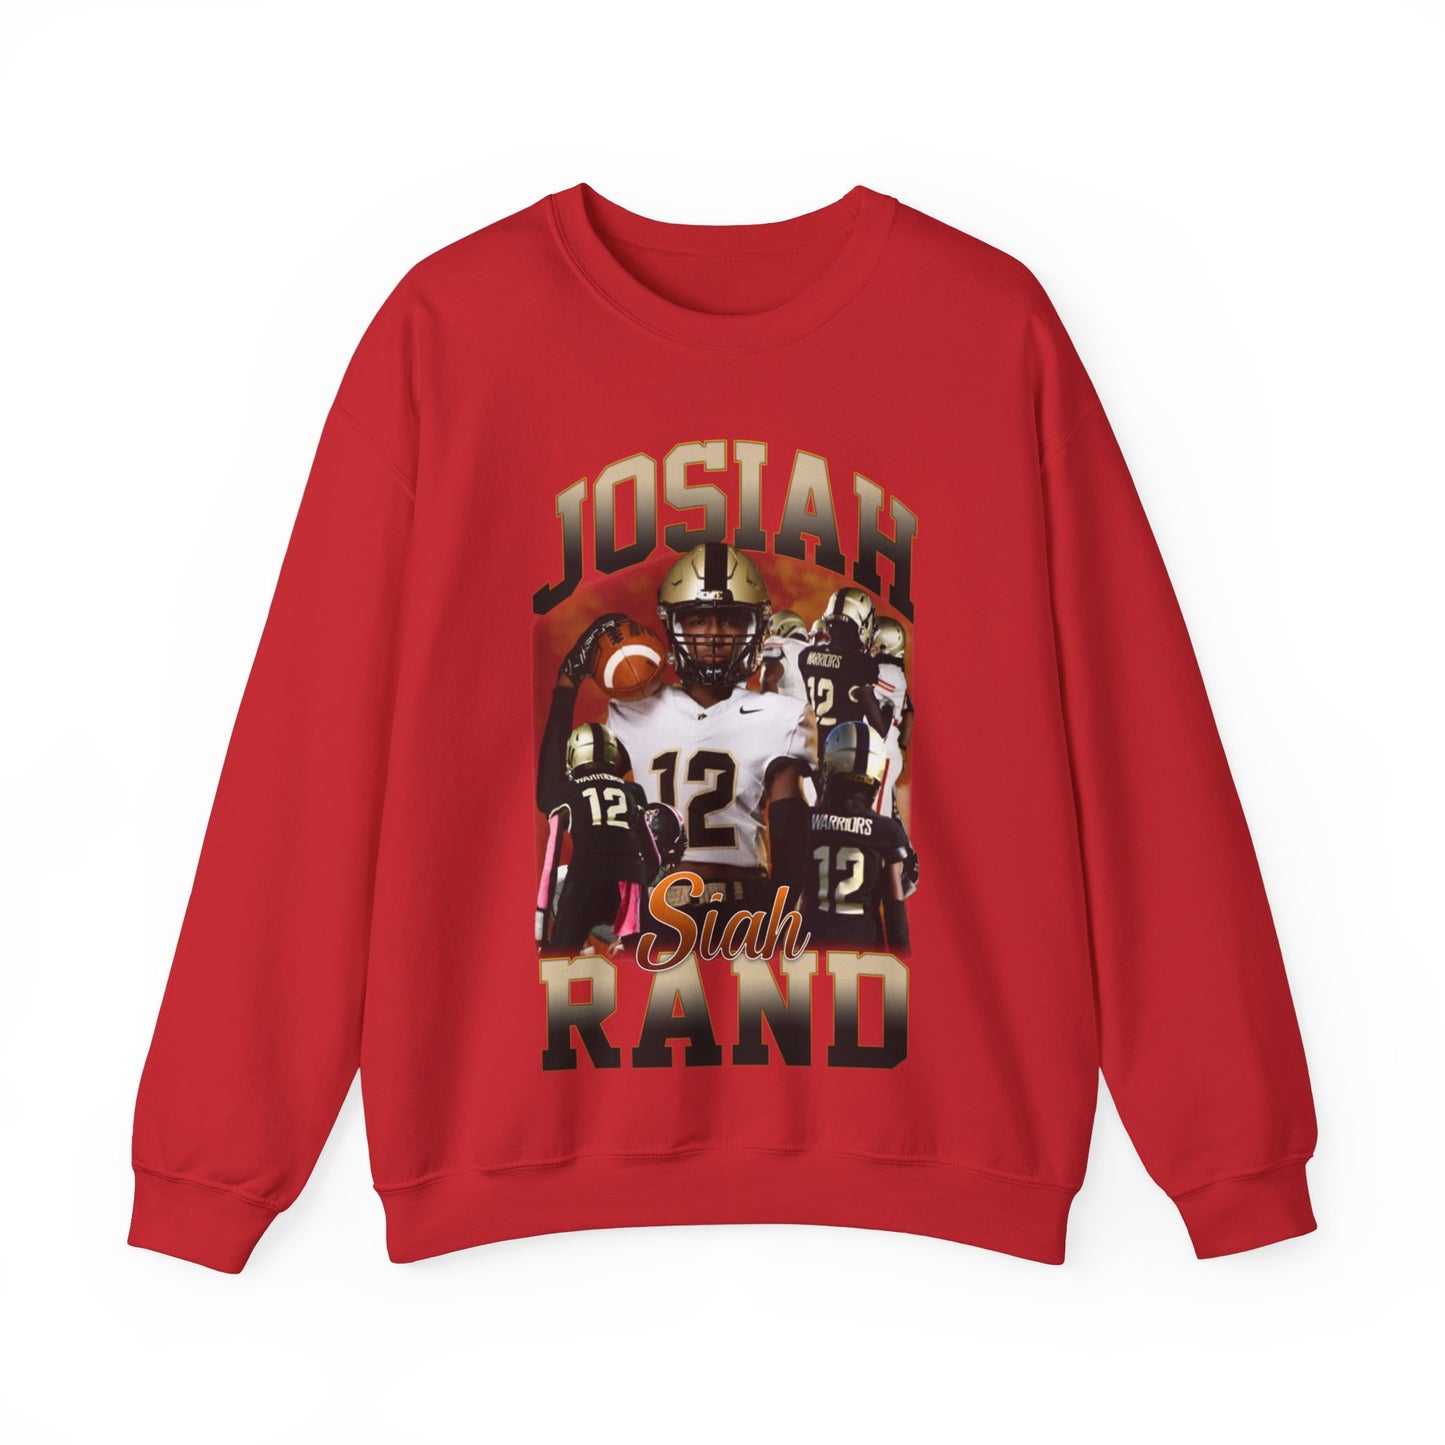 Josiah Rand Crewneck Sweatshirt